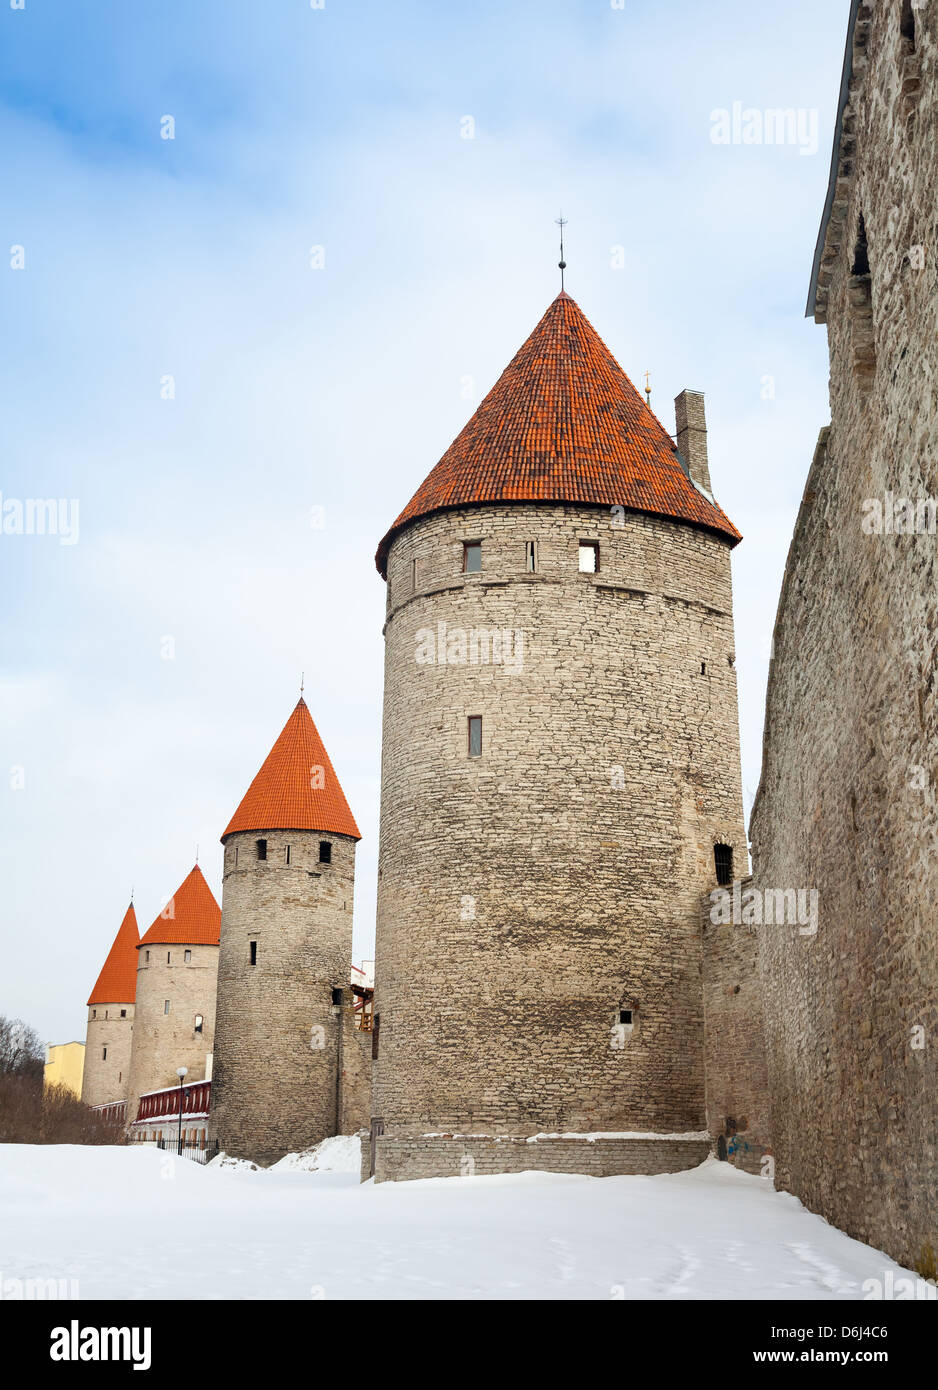 Ancient stone fortress towers in Tallinn, Estonia Stock Photo